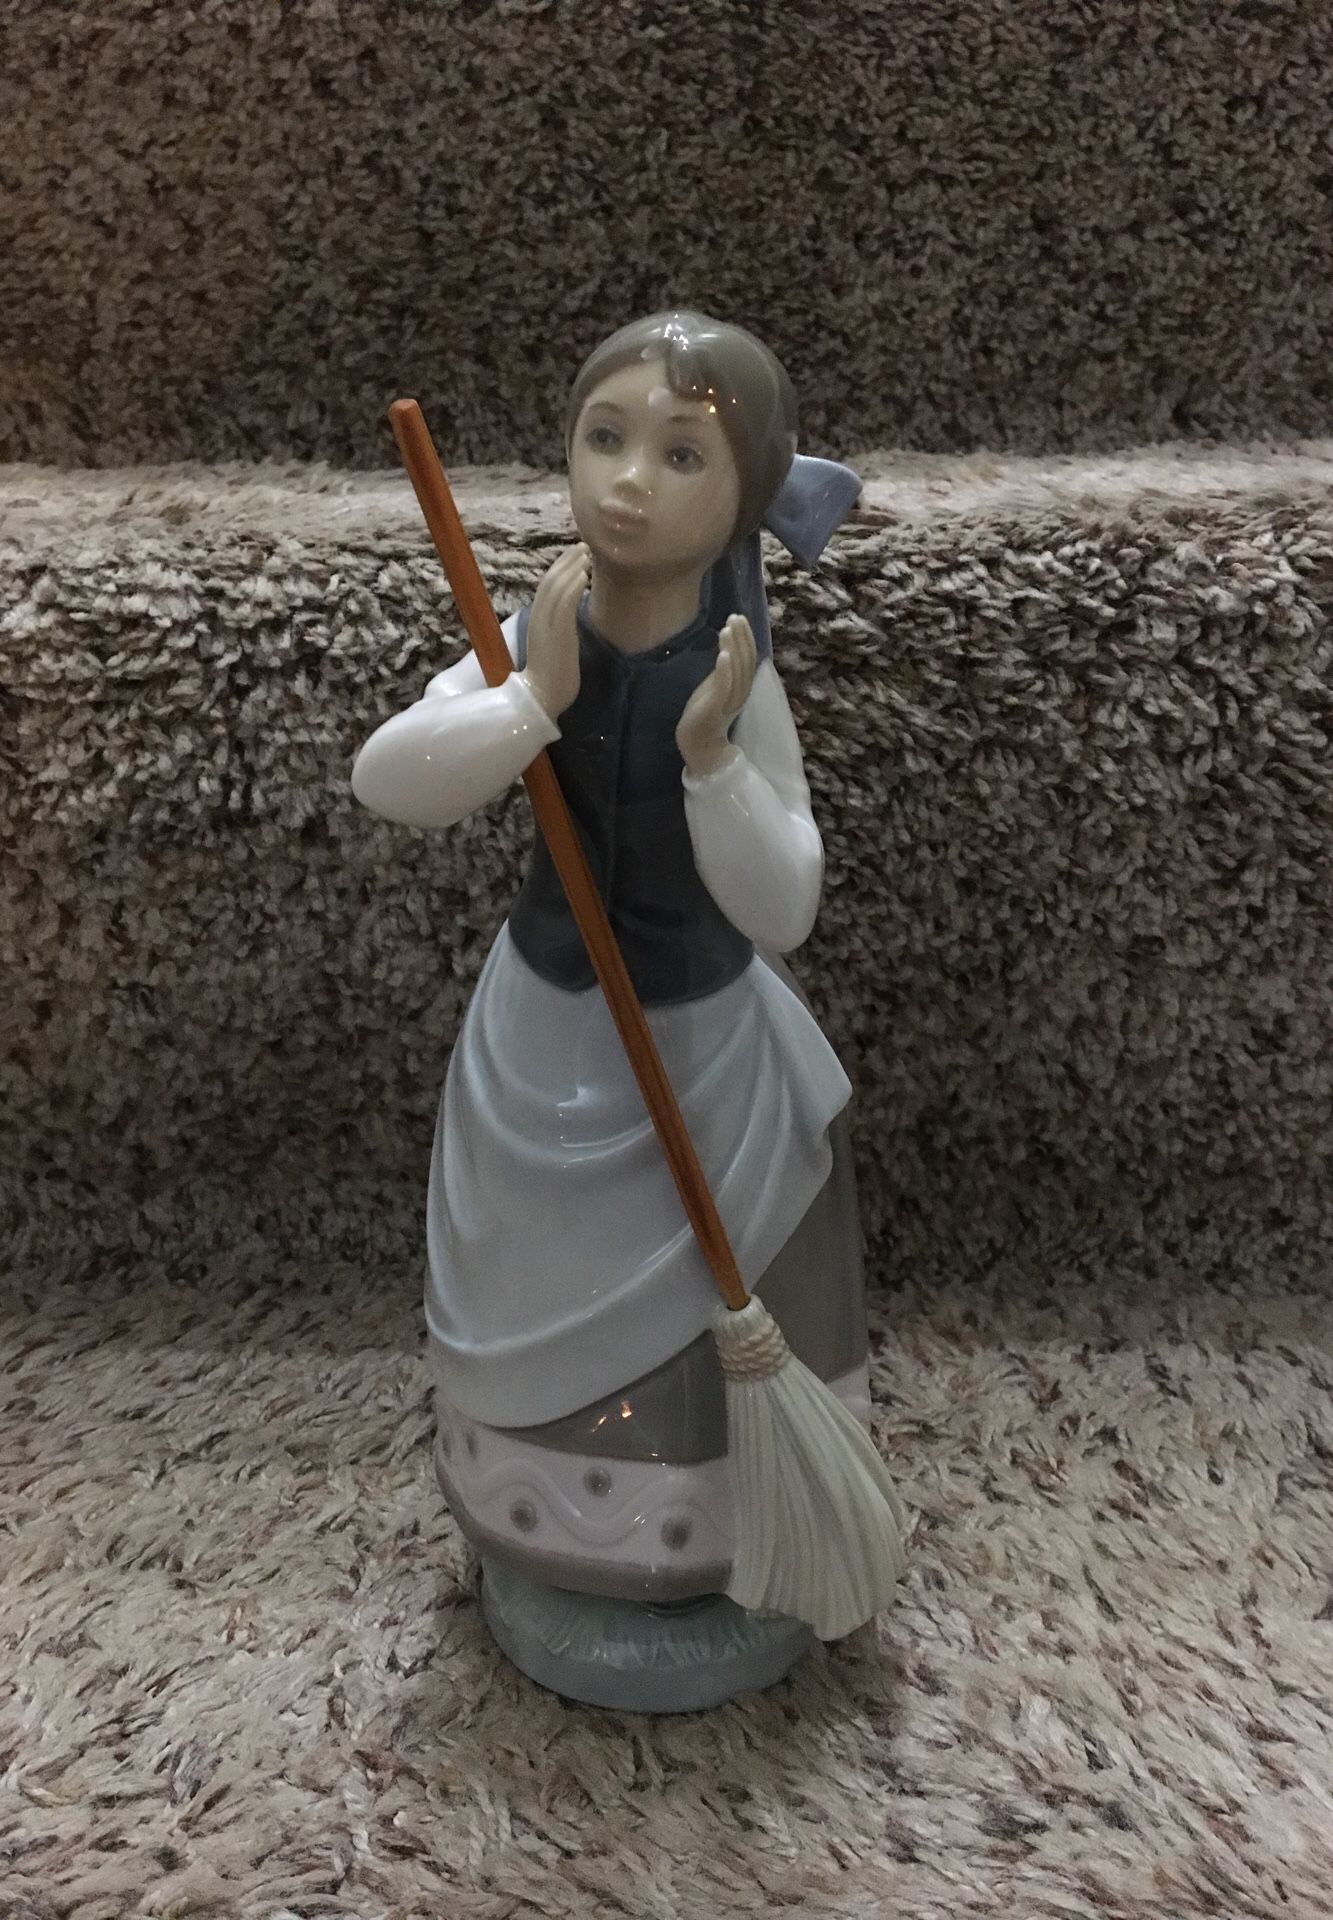 Lladro “Girl With Broom” Figurine